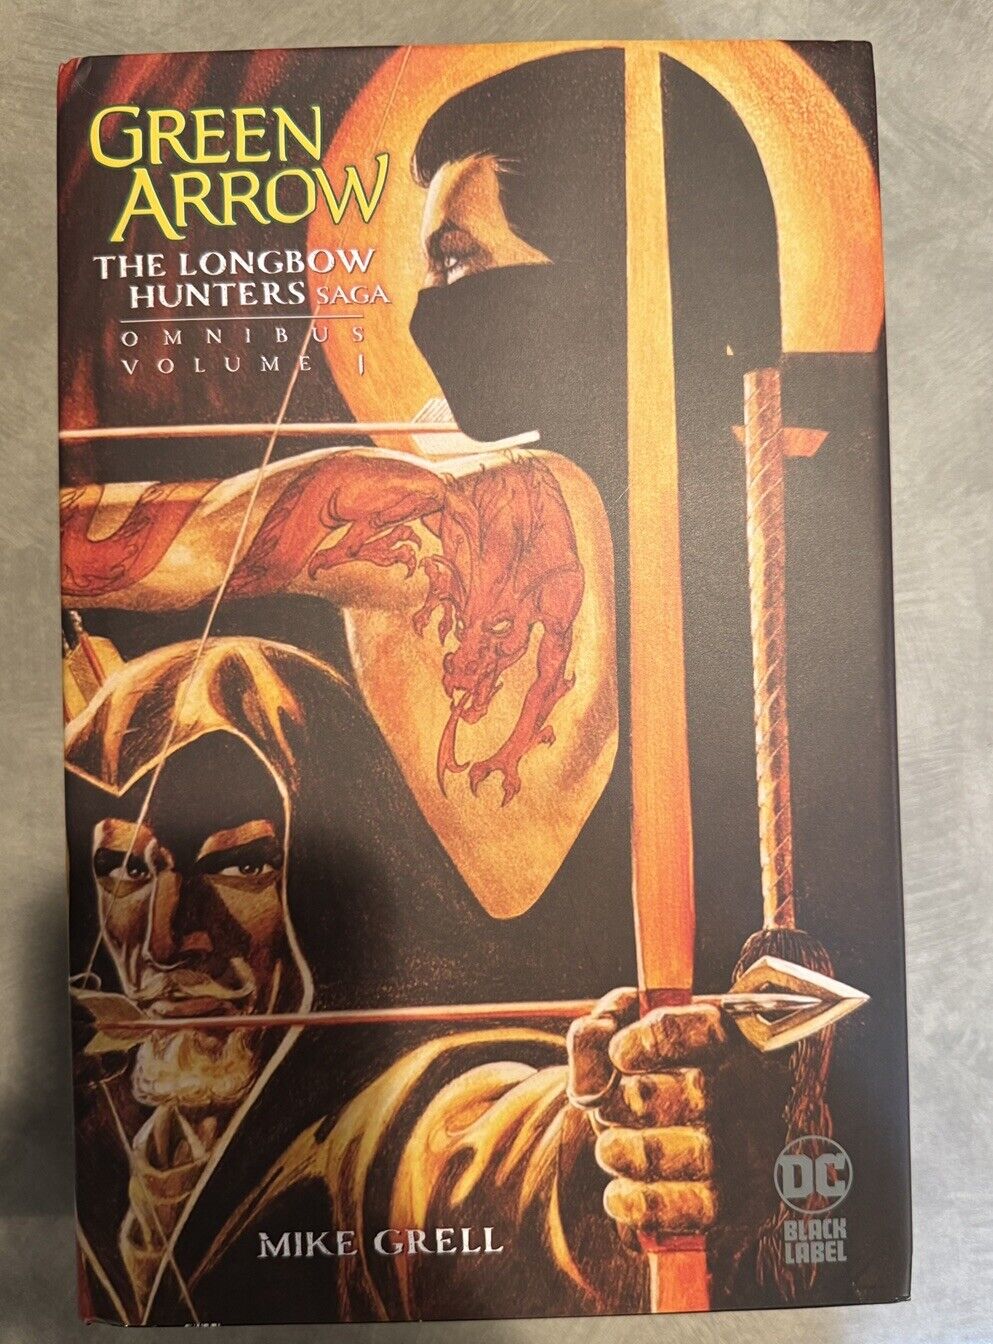 Green Arrow: The Longbow Hunters Saga Omnibus Vol. 1 [Hardcover] Grell, Mike